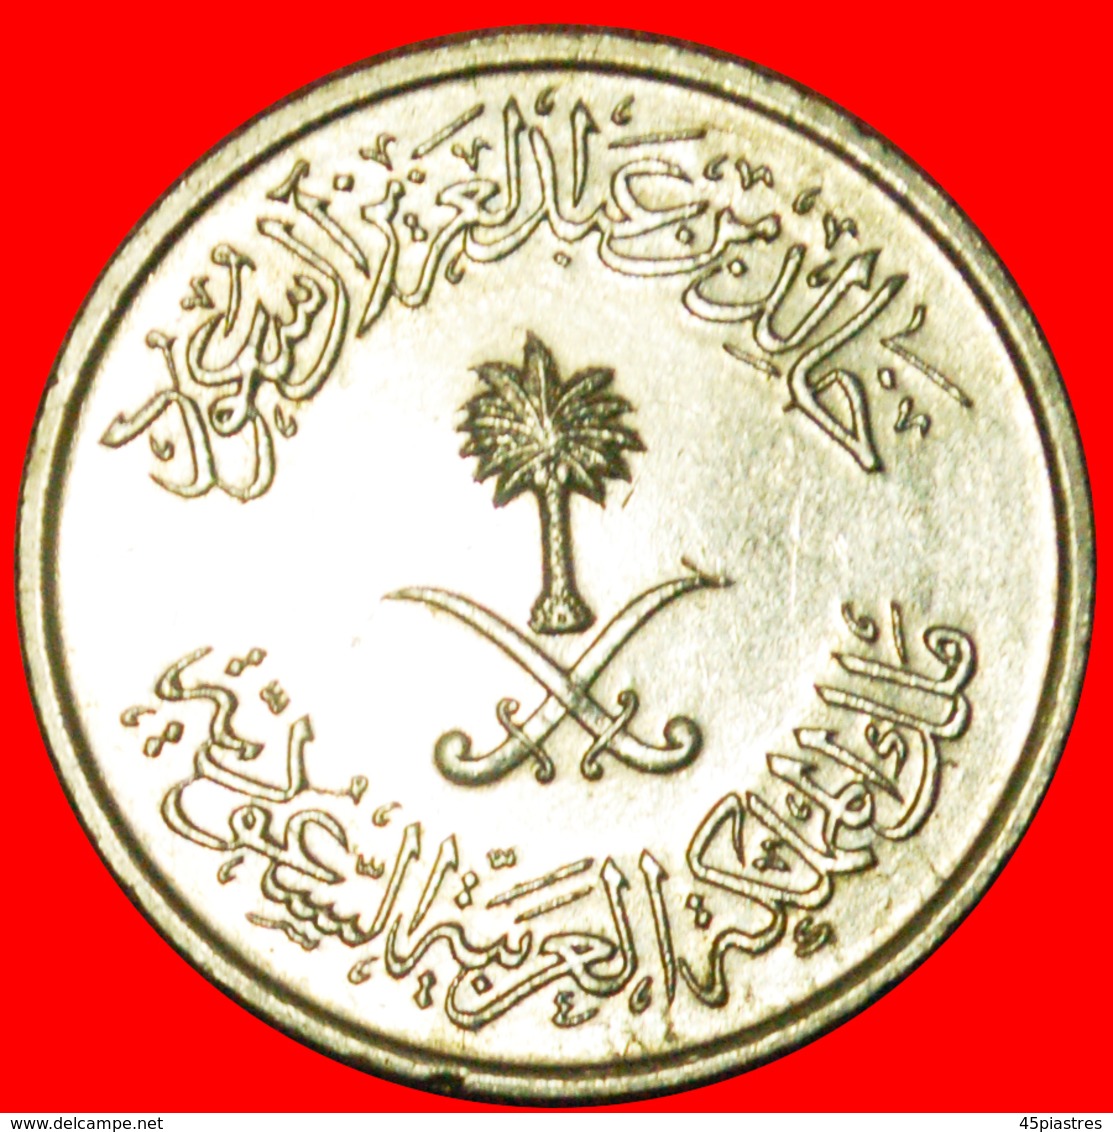 # DAGGERS AND PALMTREE: SAUDI ARABIA ★ 25 HALALA / 1/4  RIYAL 1400 (1980) MINT LUSTER! LOW START ★ NO RESERVE! - Saudi-Arabien